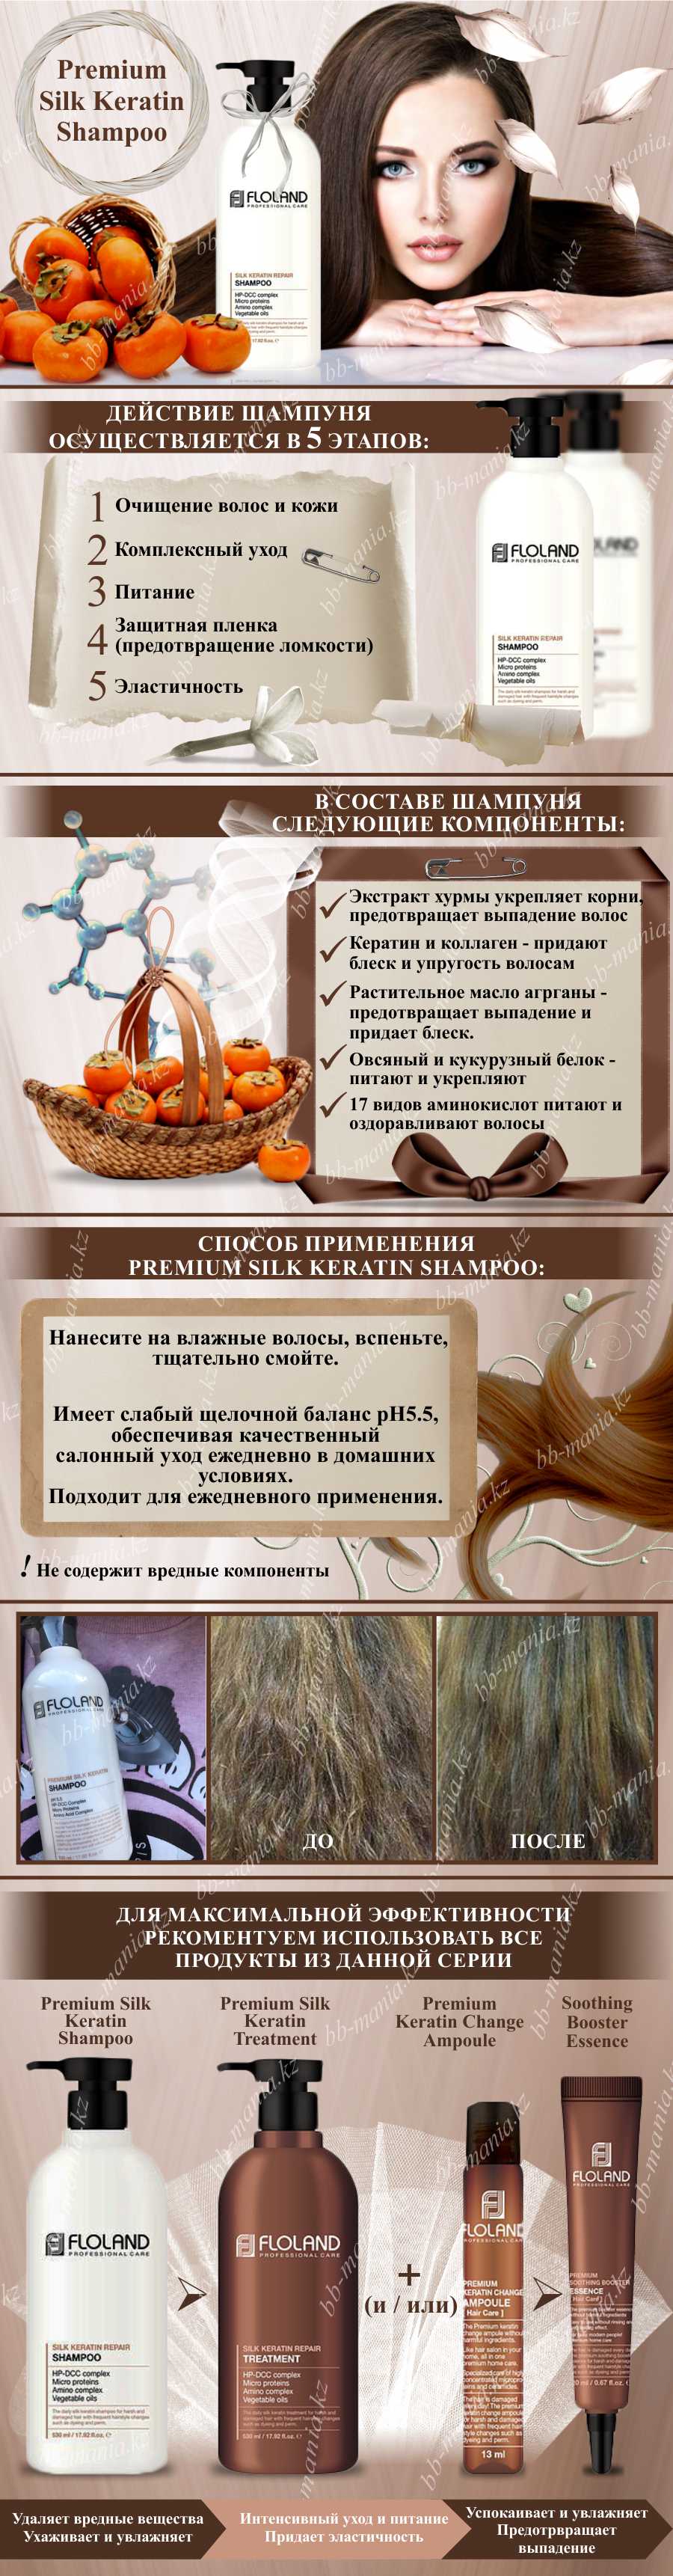 Premium Silk Keratin Shampoo [Floland]-min